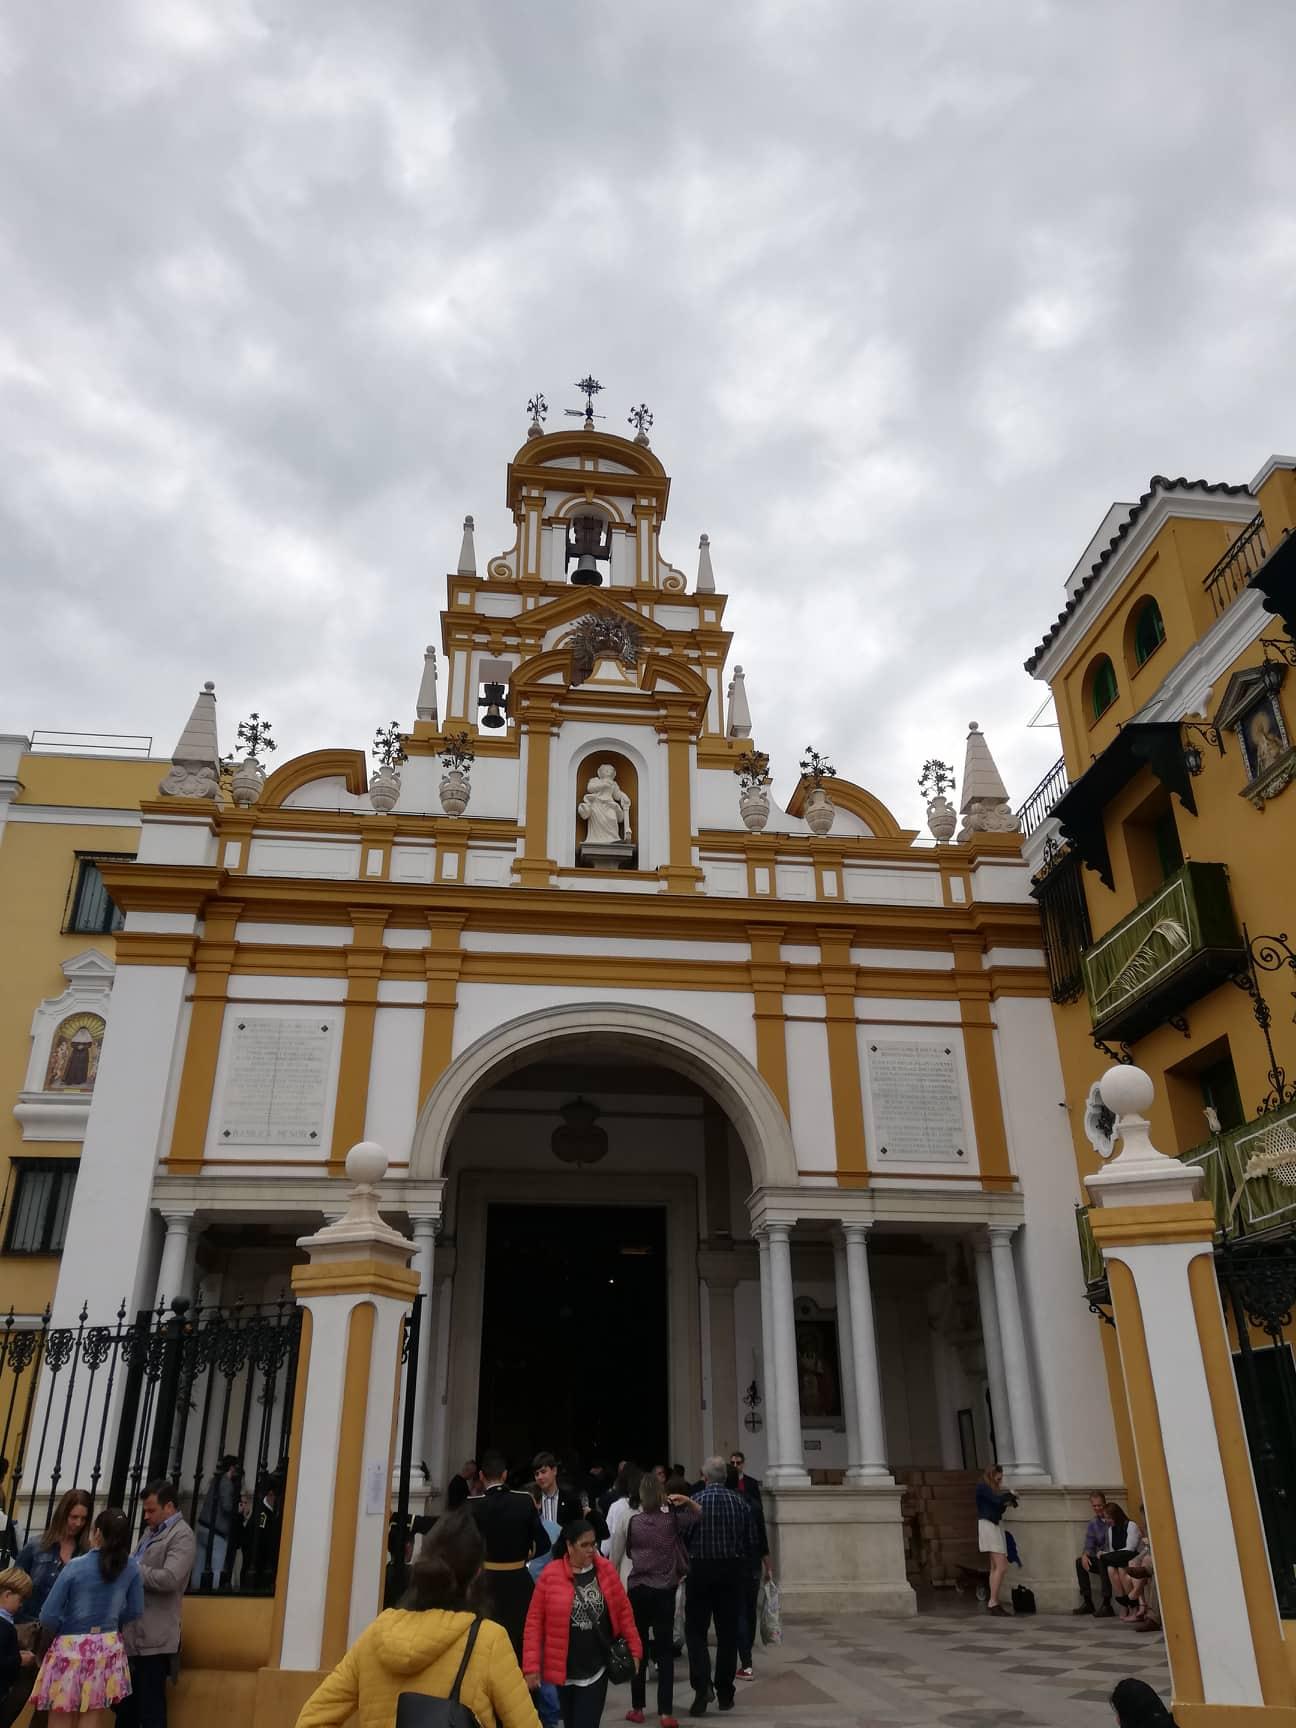 Cover image of this place Basílica de la Macarena